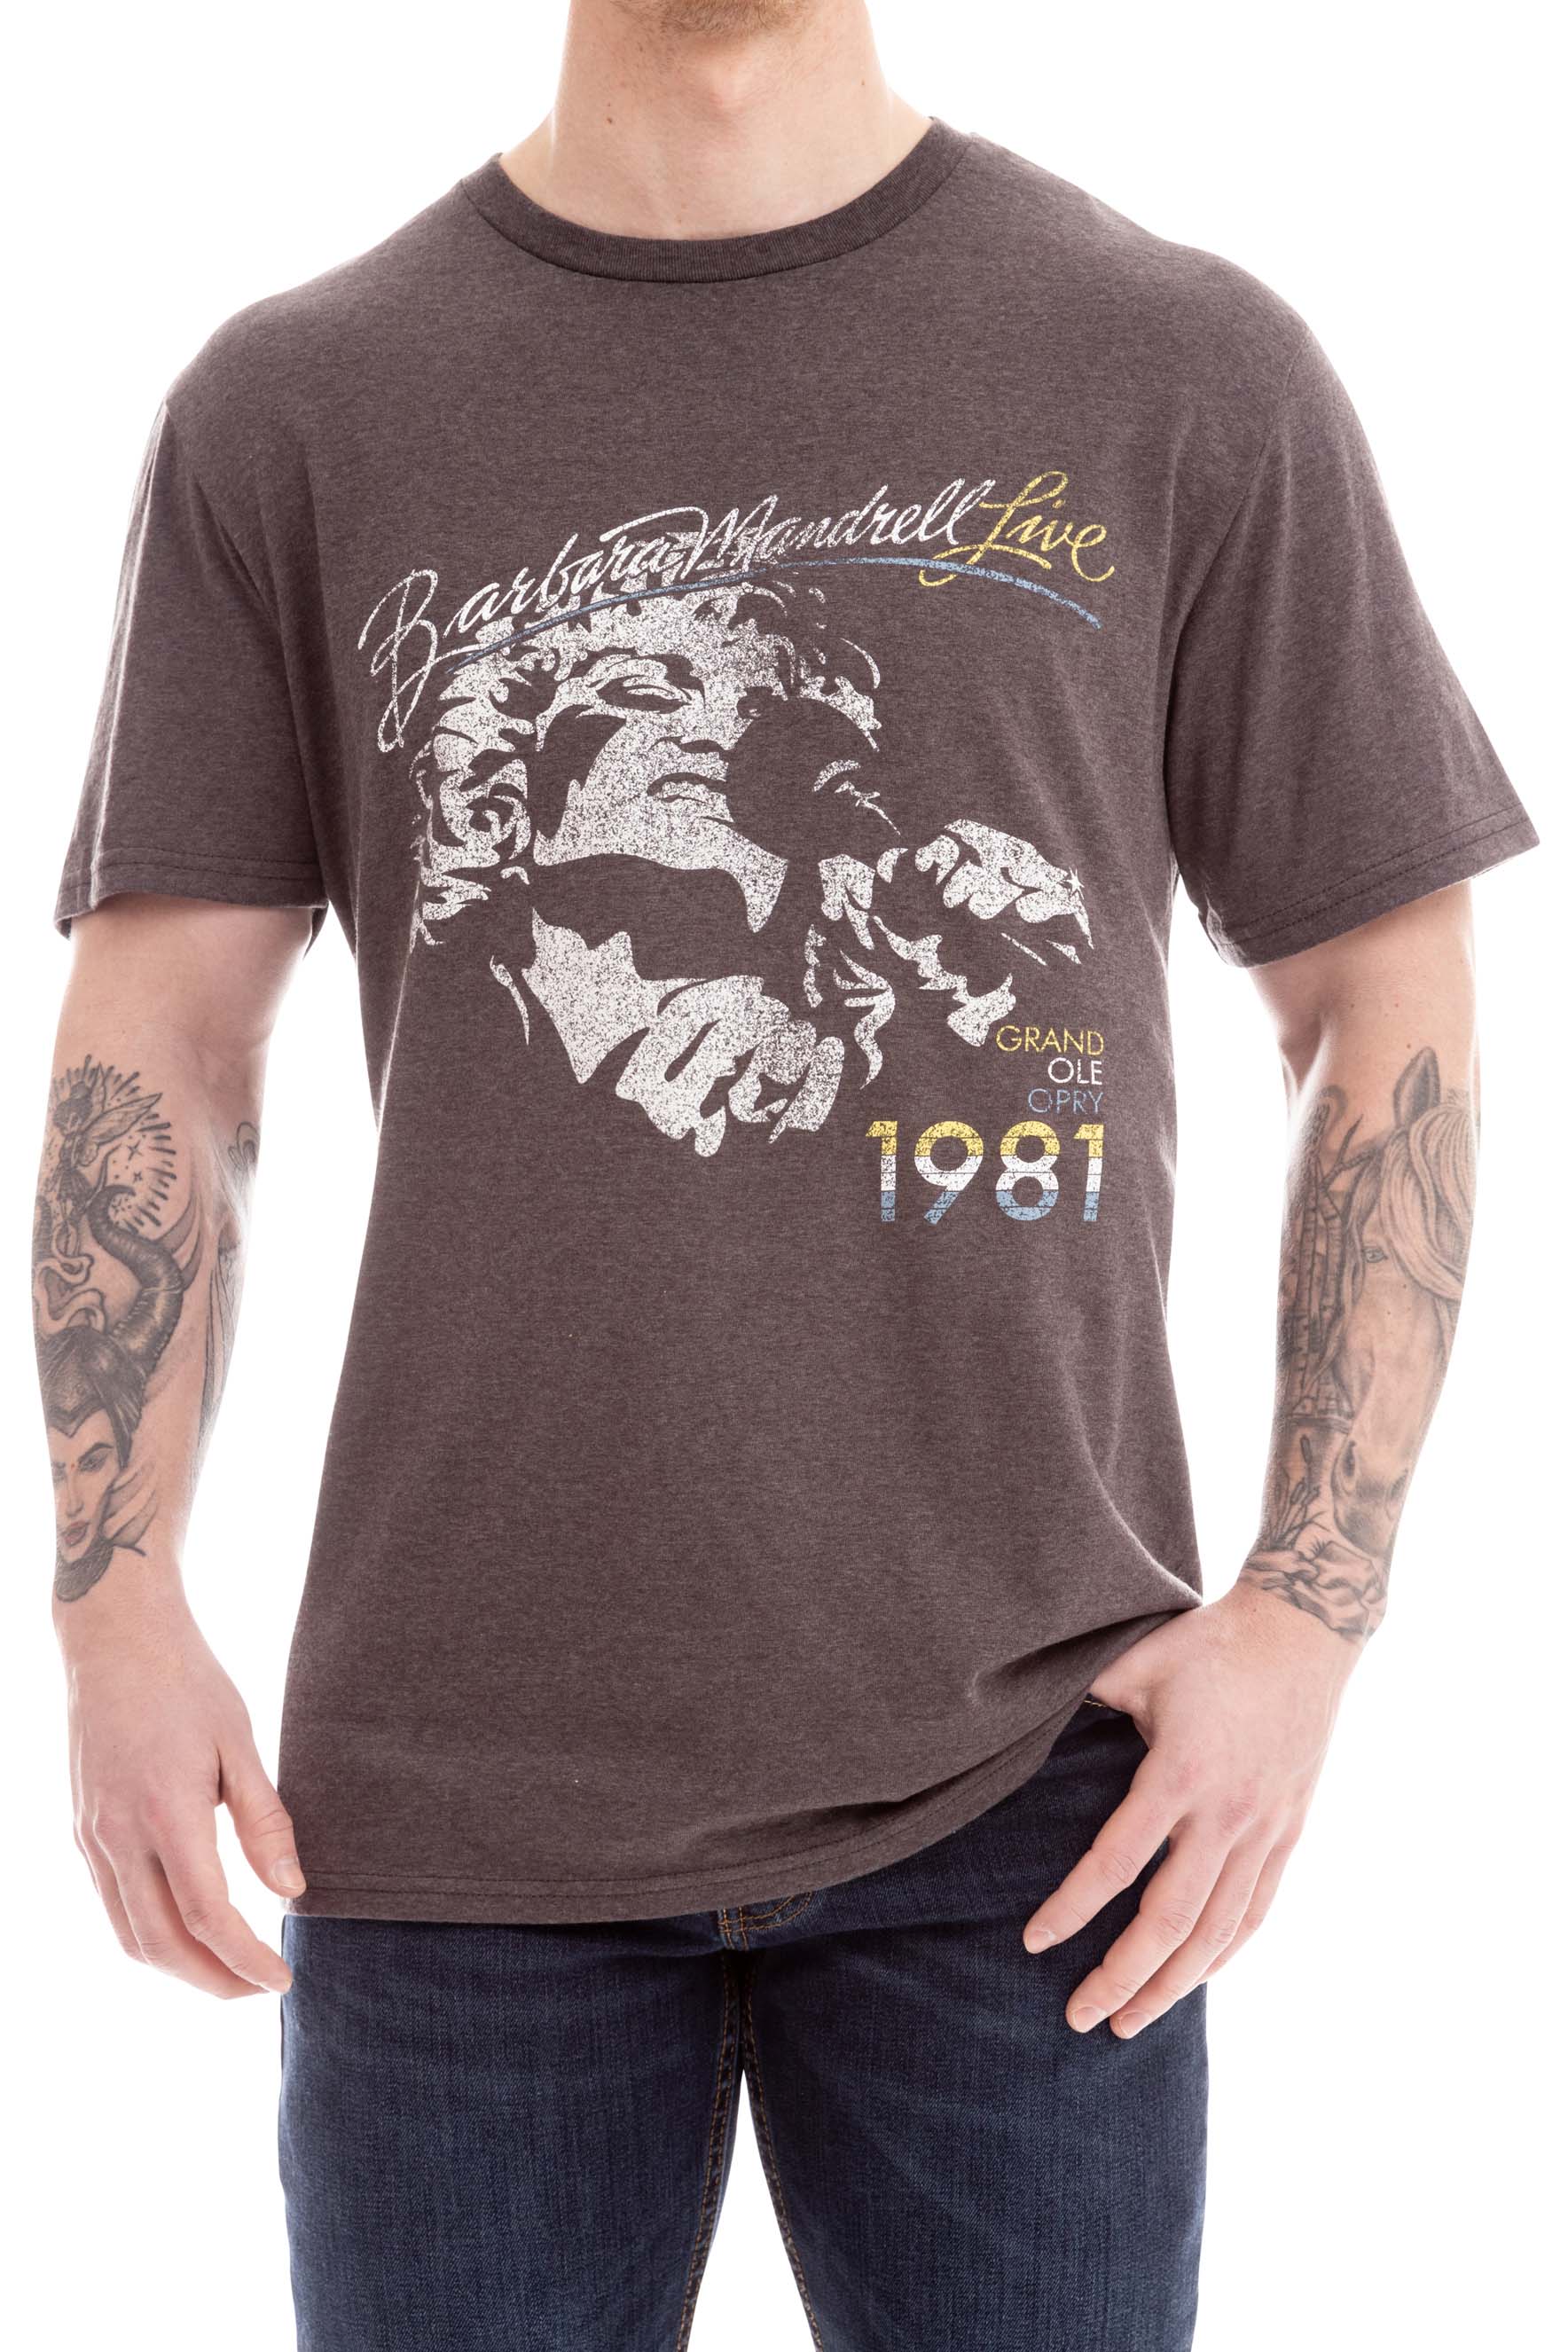 Barbara Mandrell 1981 Tour T-Shirt